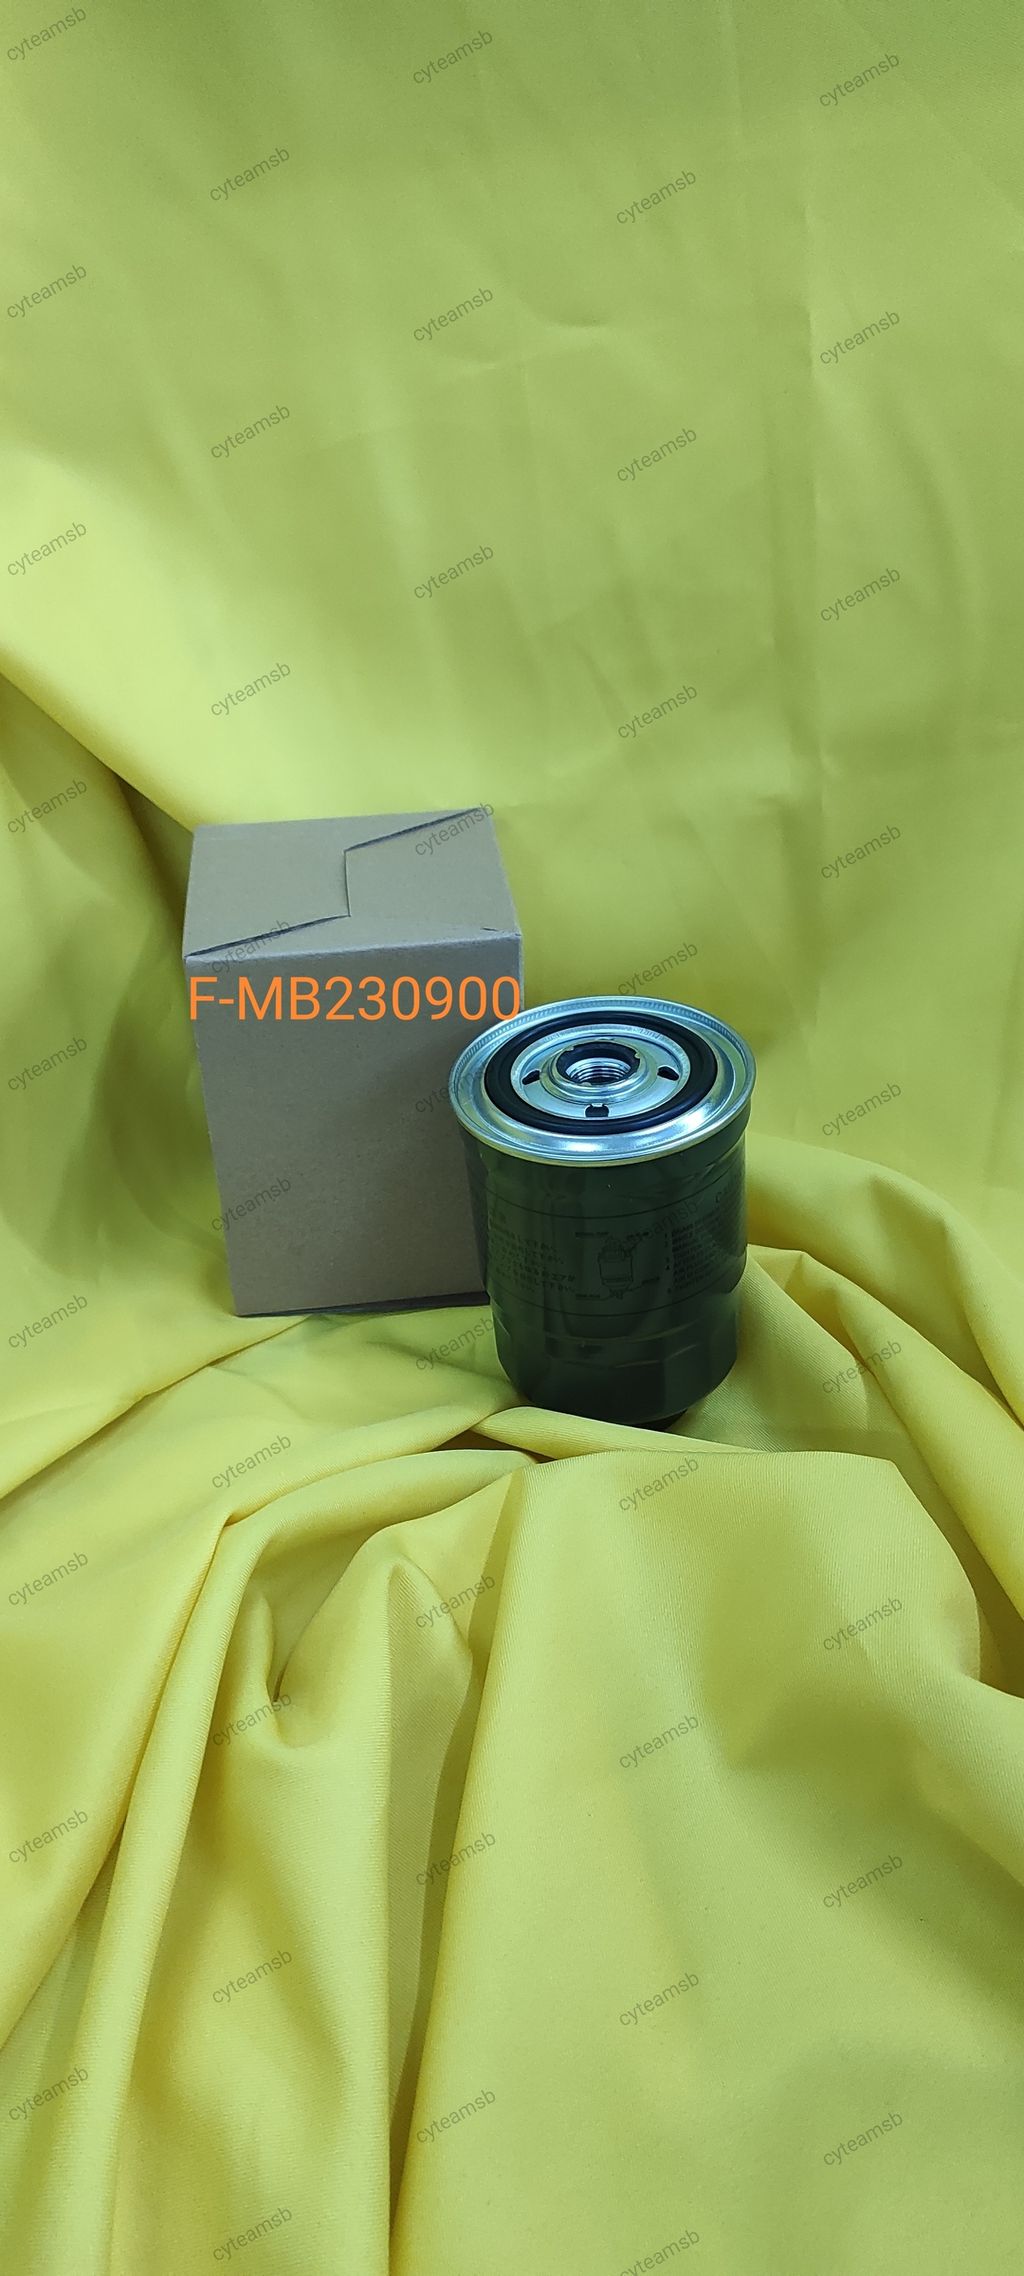 F-MB220900